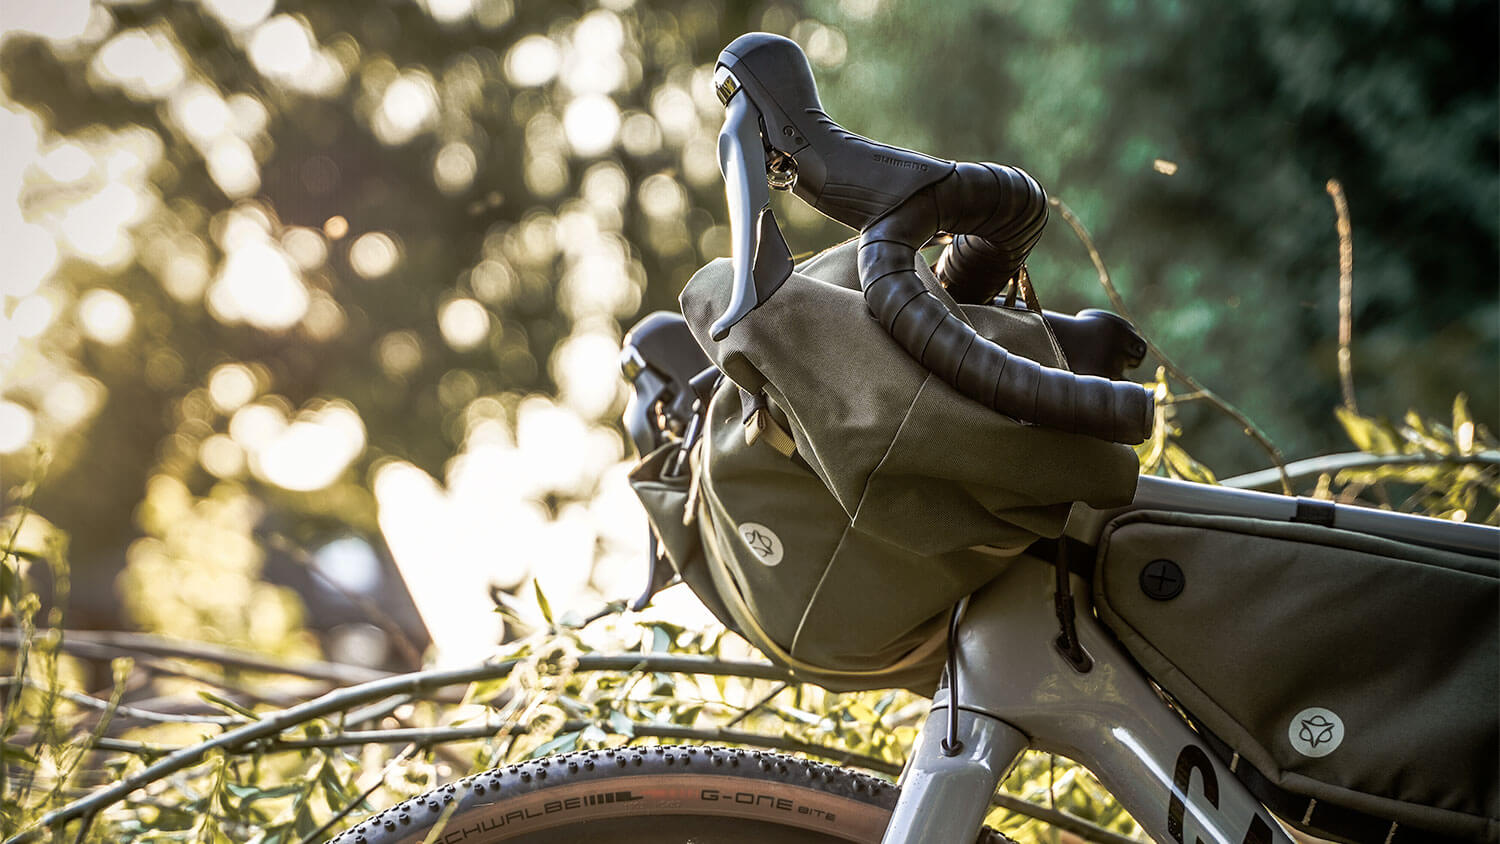 De AGU Venture fietskleding en bikepacking tassen | Review